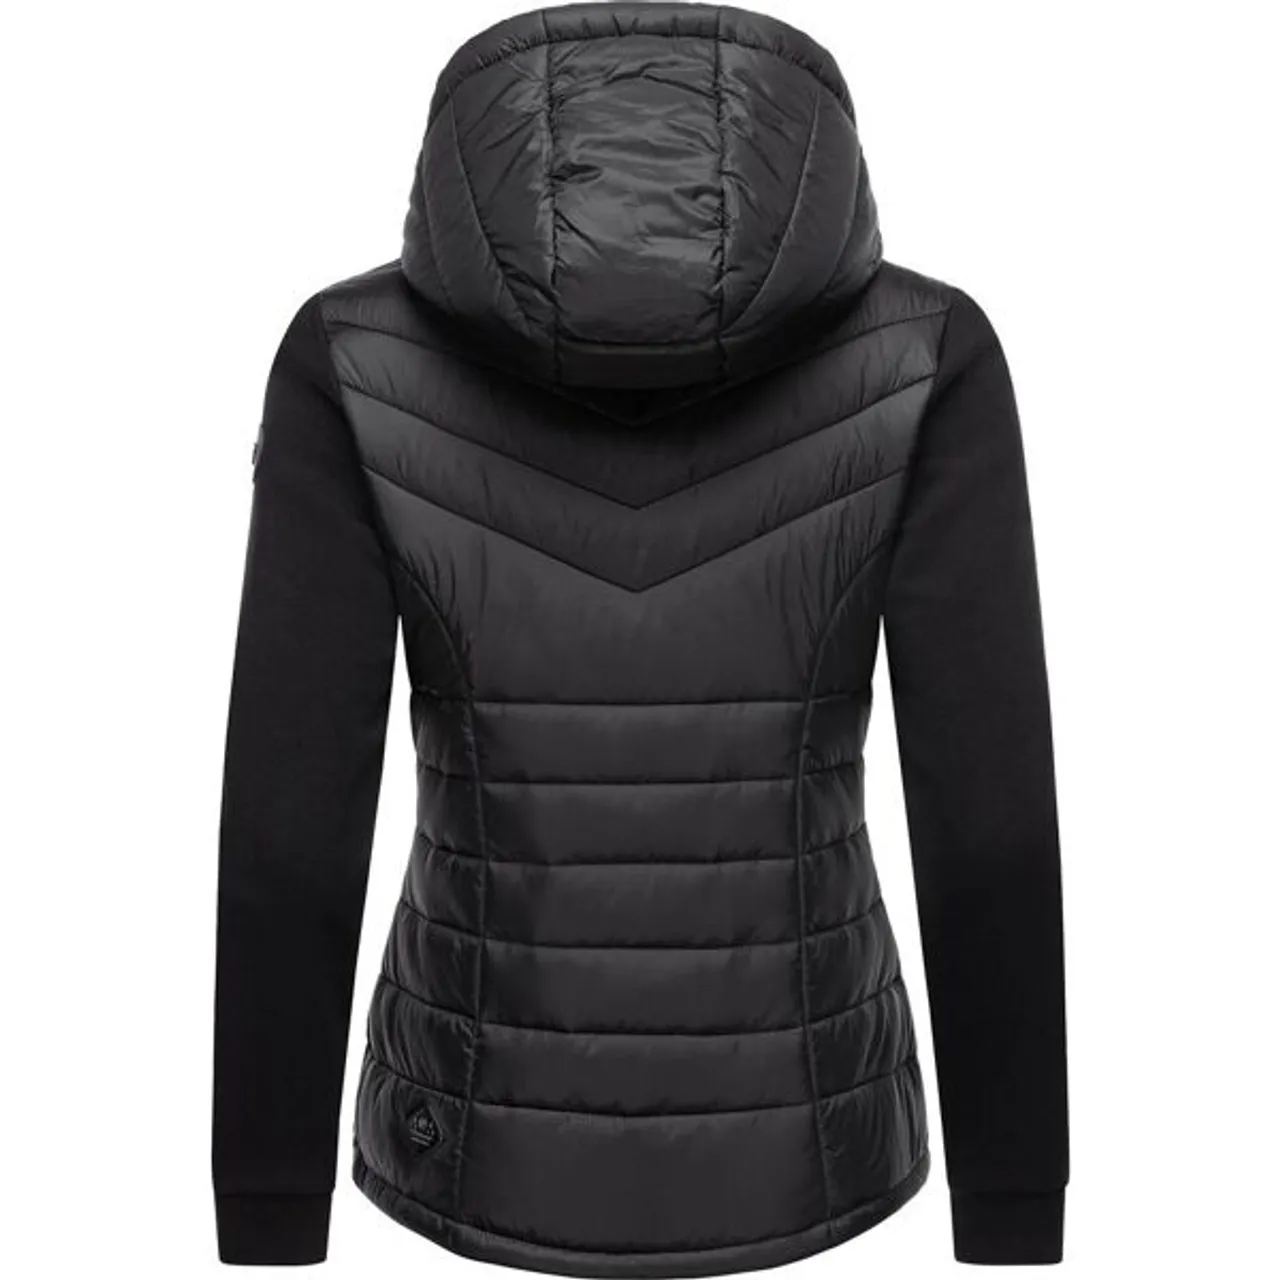 Outdoorjacke RAGWEAR "Sandrra" Gr. XS (34), schwarz (black) Damen Jacken Kurze Steppjacke aus modernem Materialmix mit Kapuze